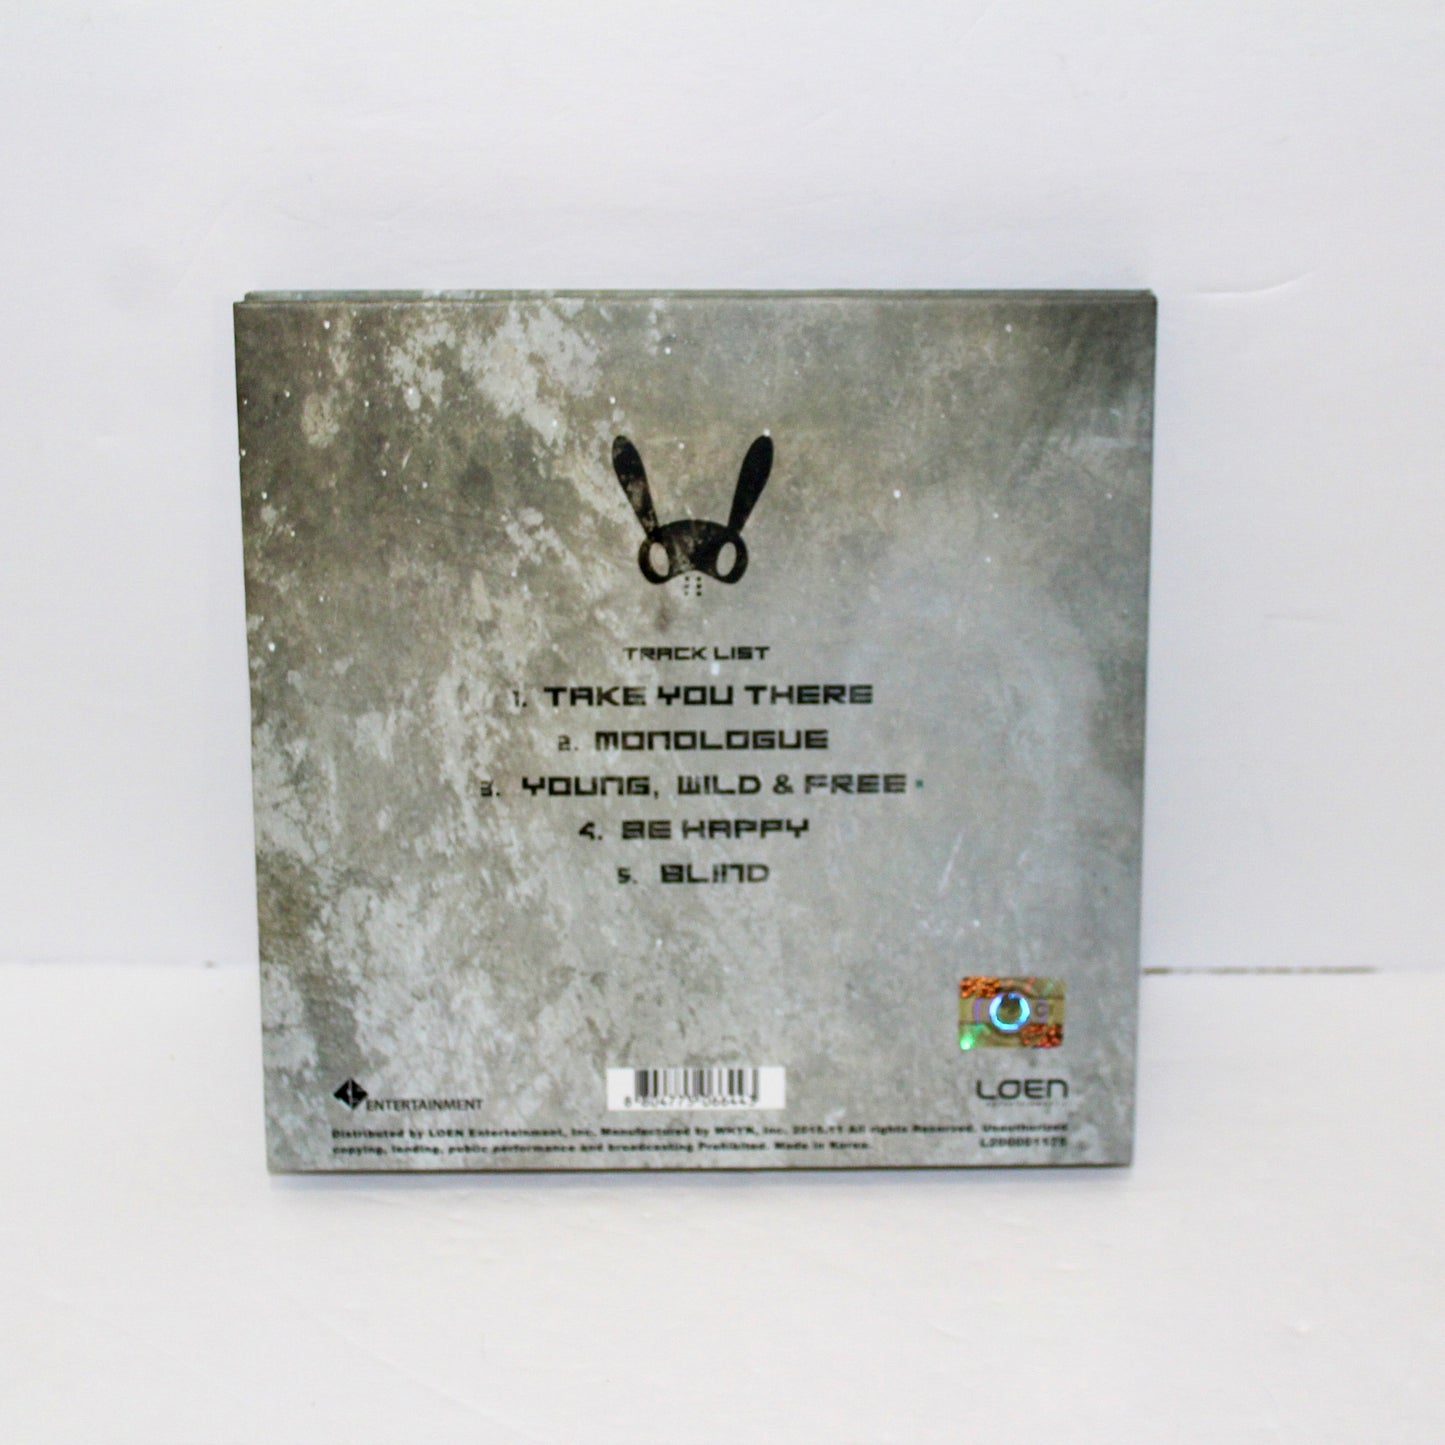 B.A.P 4th Mini Album: Matrix | Standard Ver.